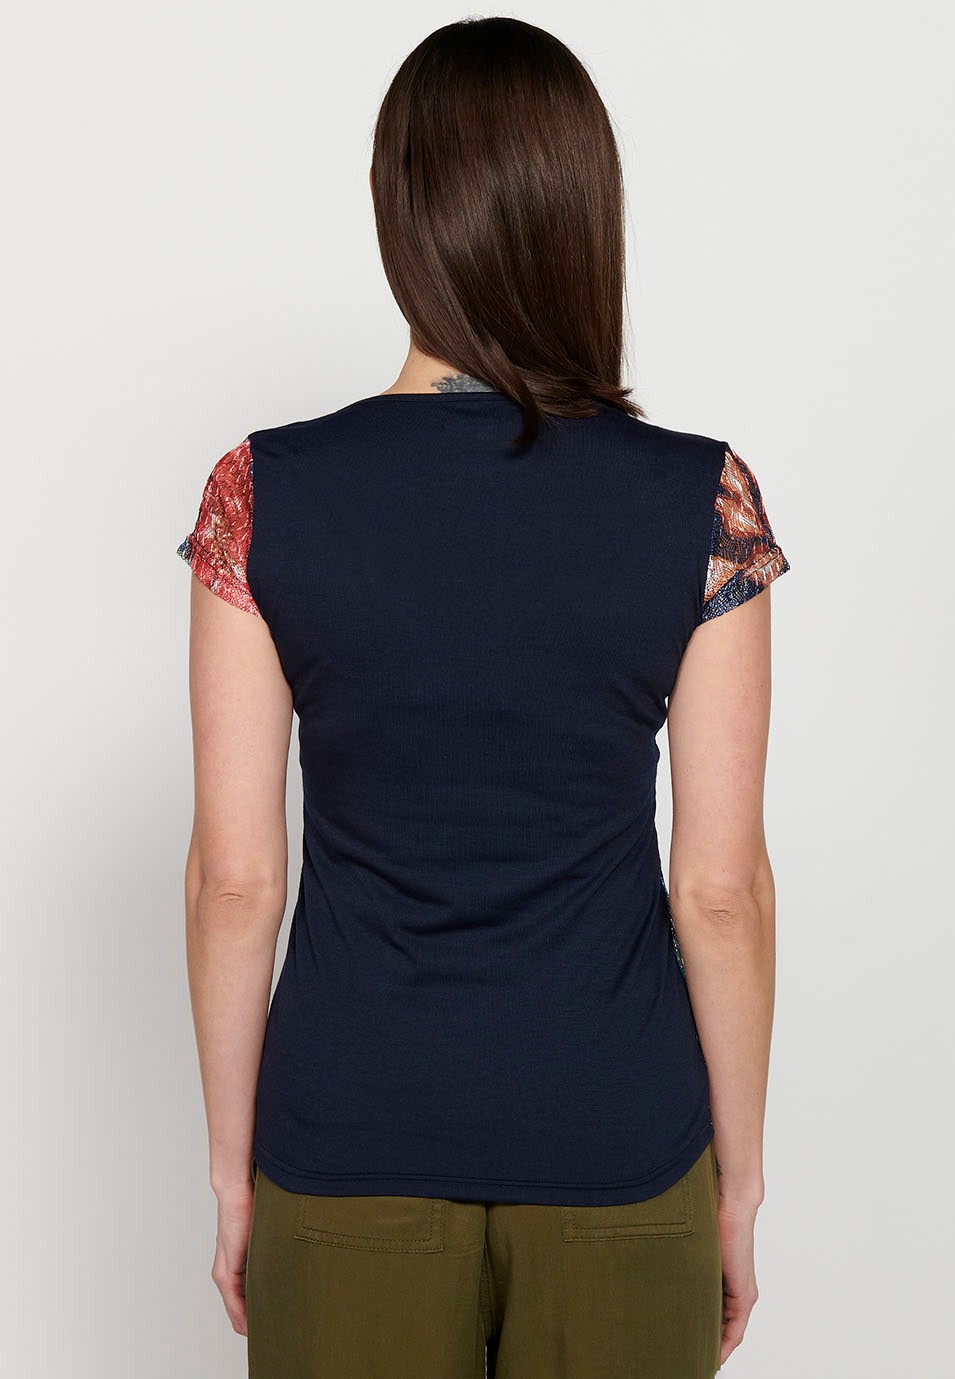 Damen-T-Shirt mit mehrfarbigem Blumendruck, V-Ausschnitt und kurzen Ärmeln